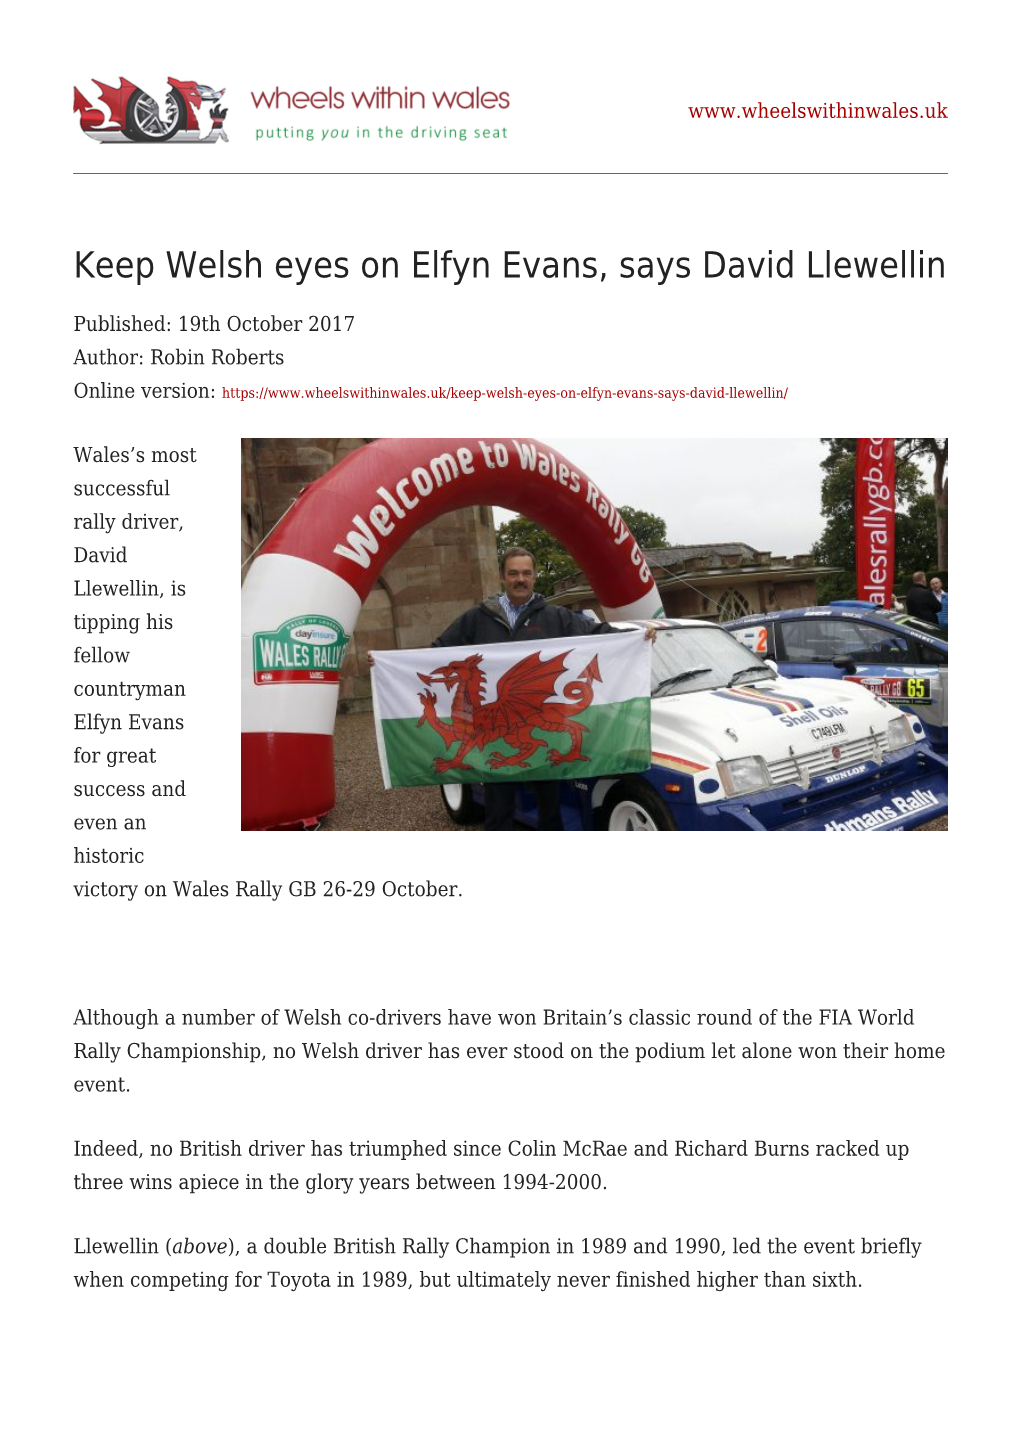 Keep Welsh Eyes on Elfyn Evans, Says David Llewellin